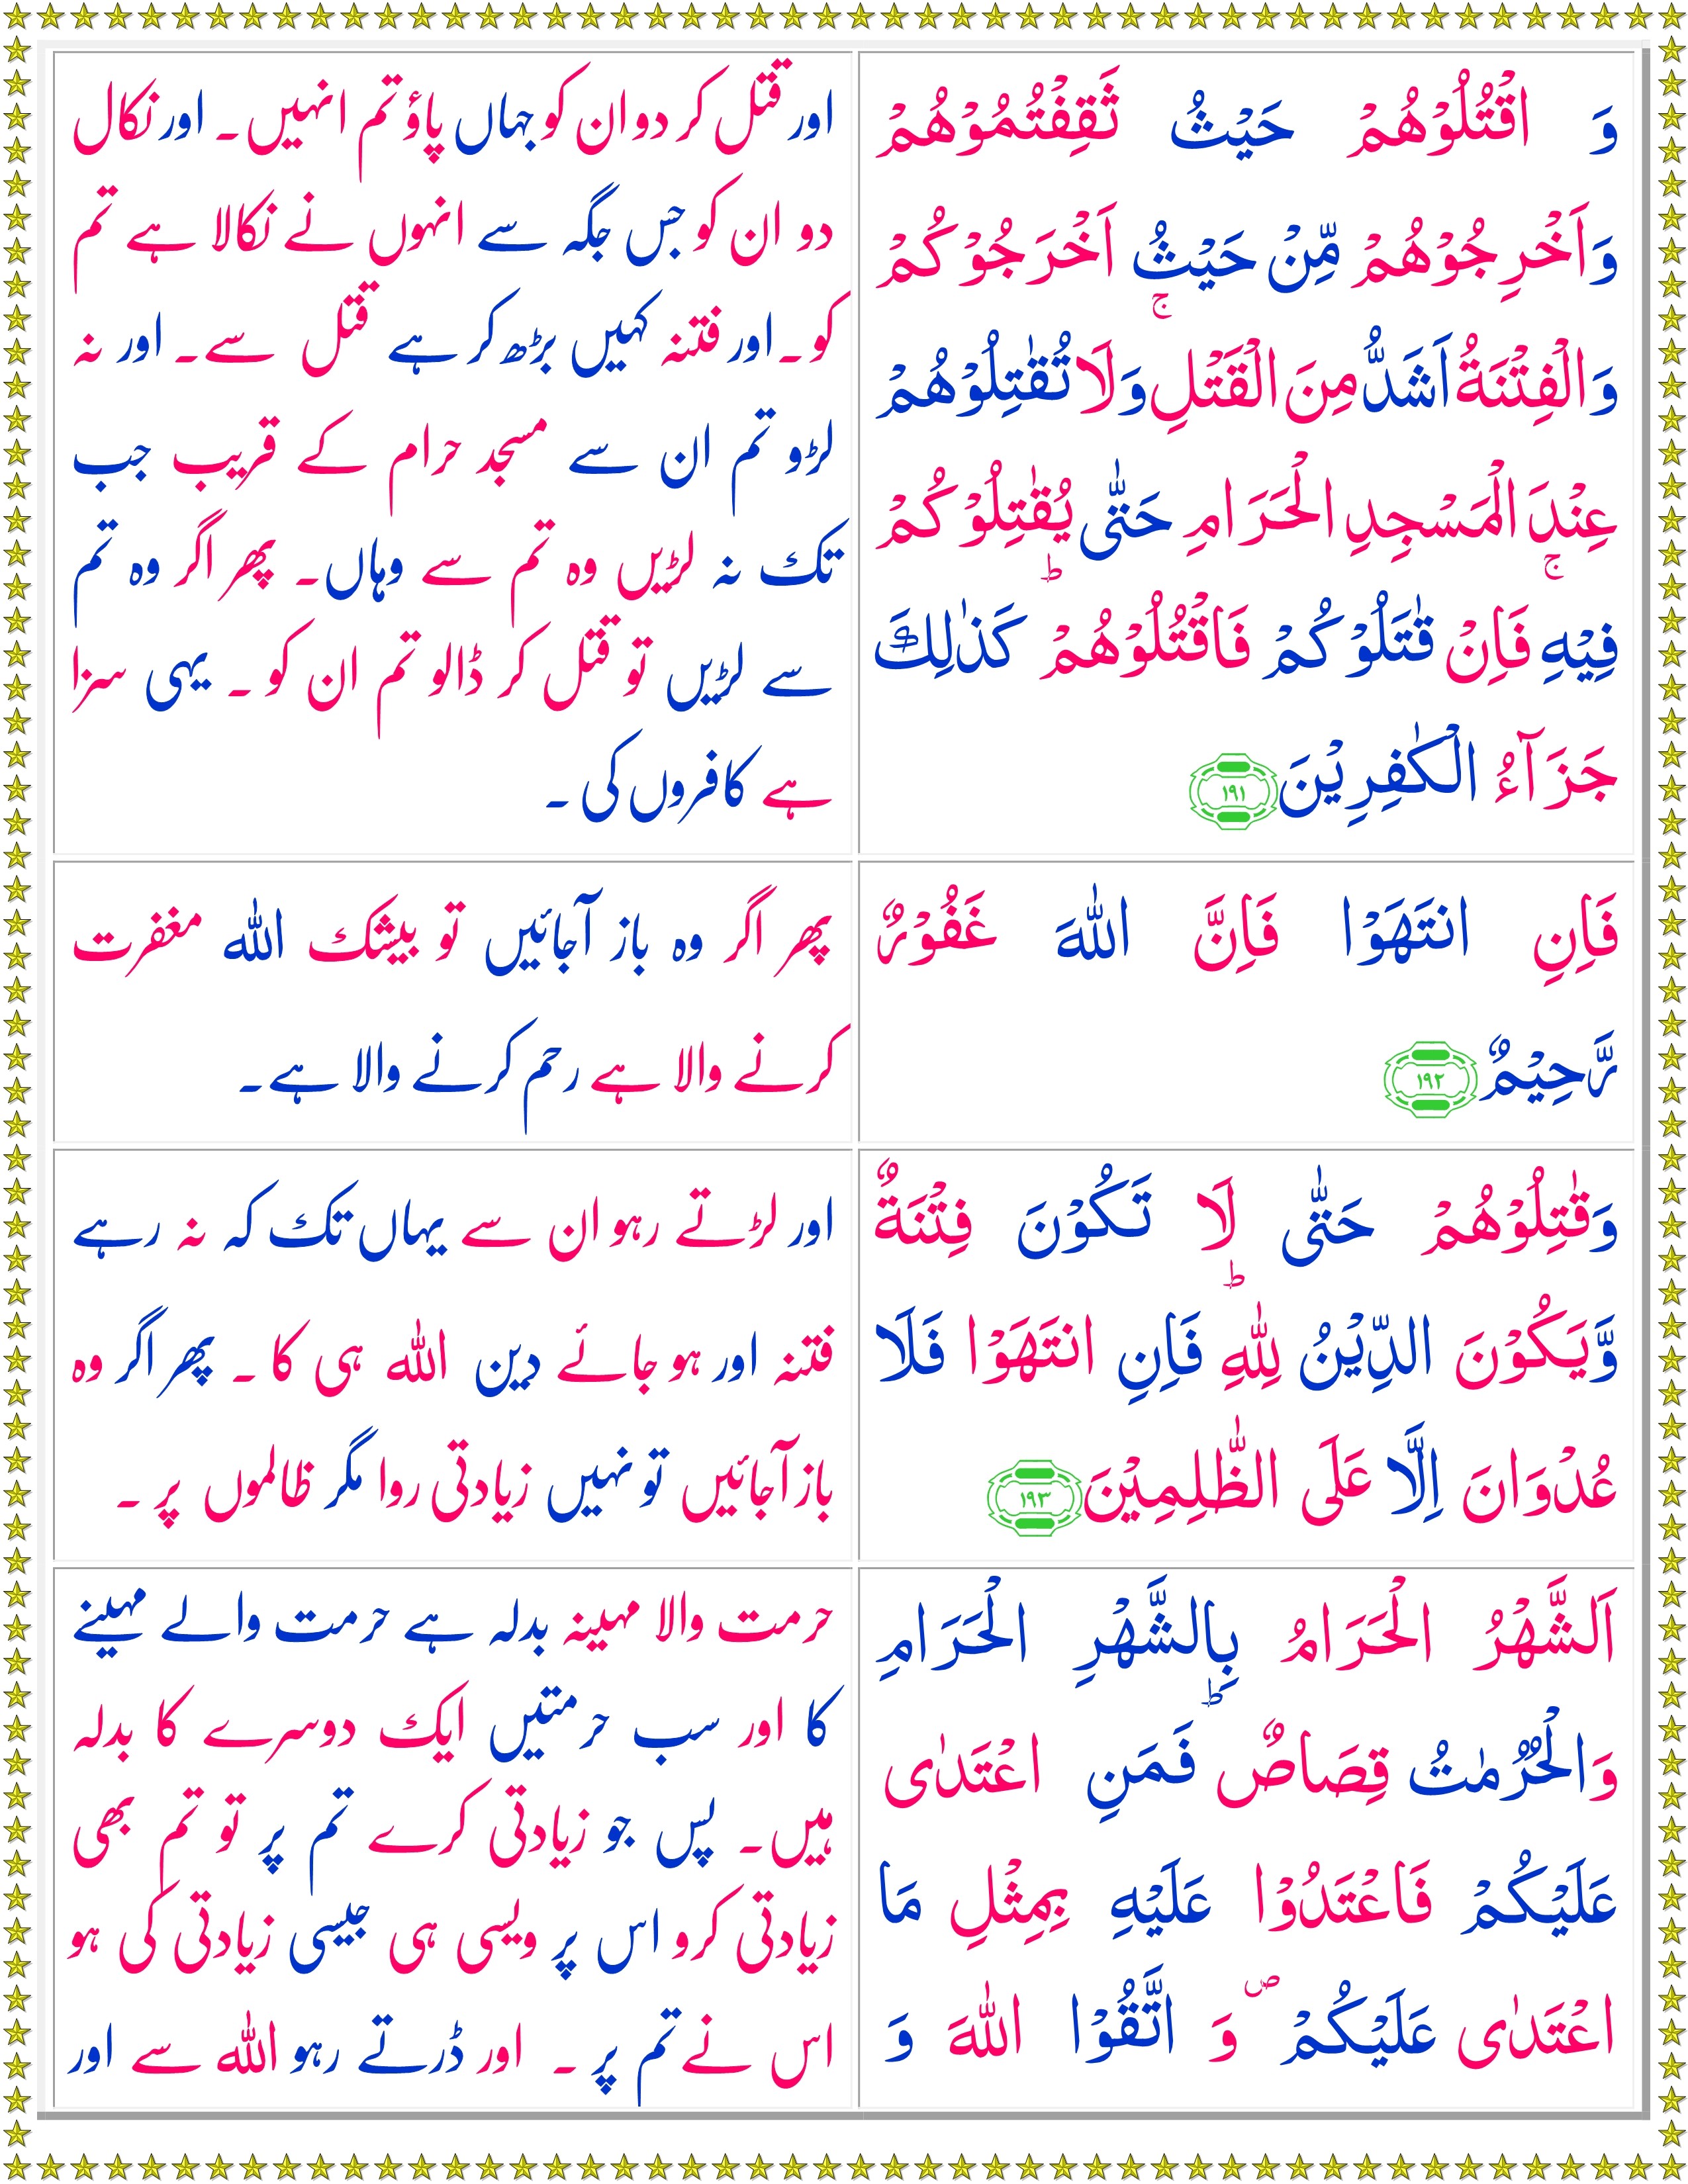 Surah Al Baqarah Urdu Page 6 Of 10 Quran O Sunnat